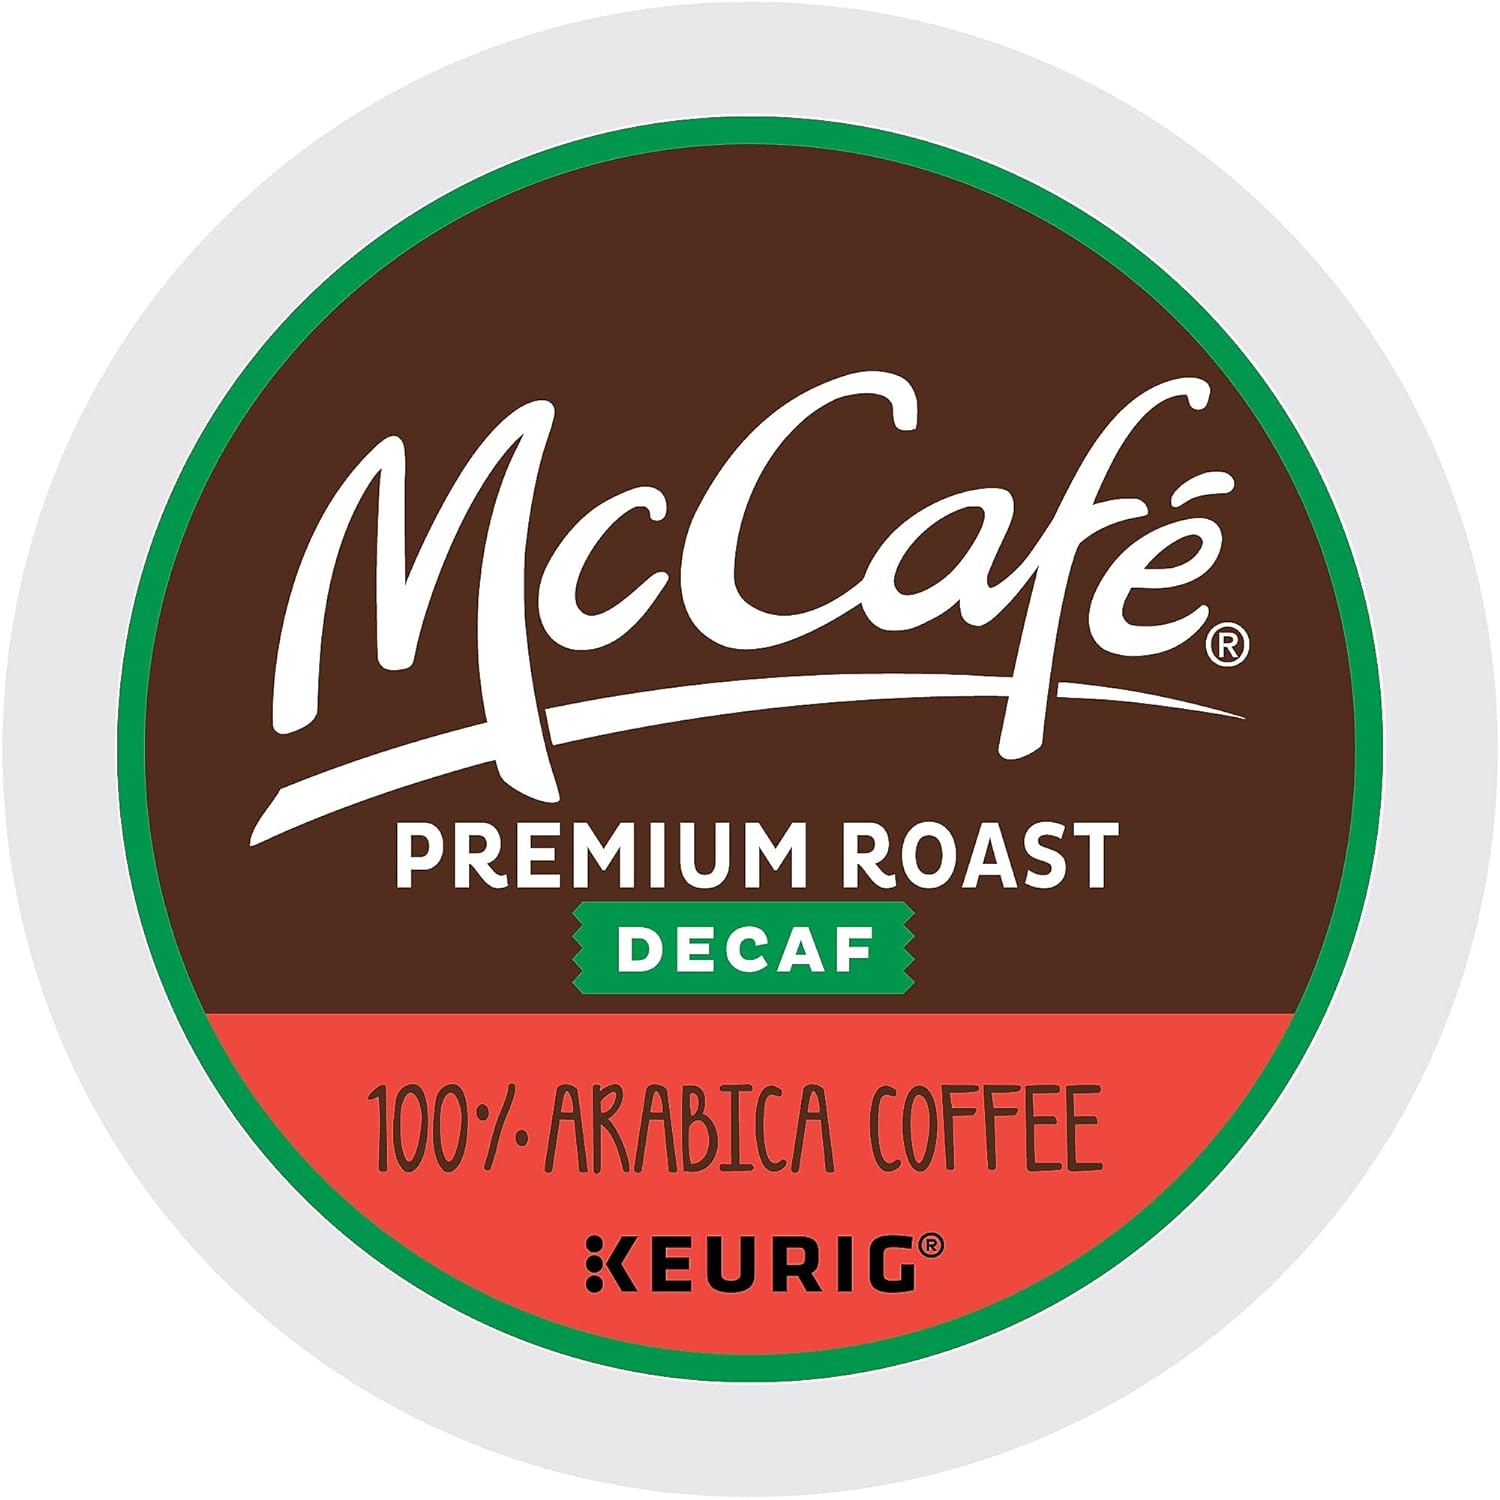 McCafe Premium Roast Decaf Coffee, Single Serve Keurig K-Cup Pods, Decaffeinated, 96 Count (4 Packs of 24) : Everything Else